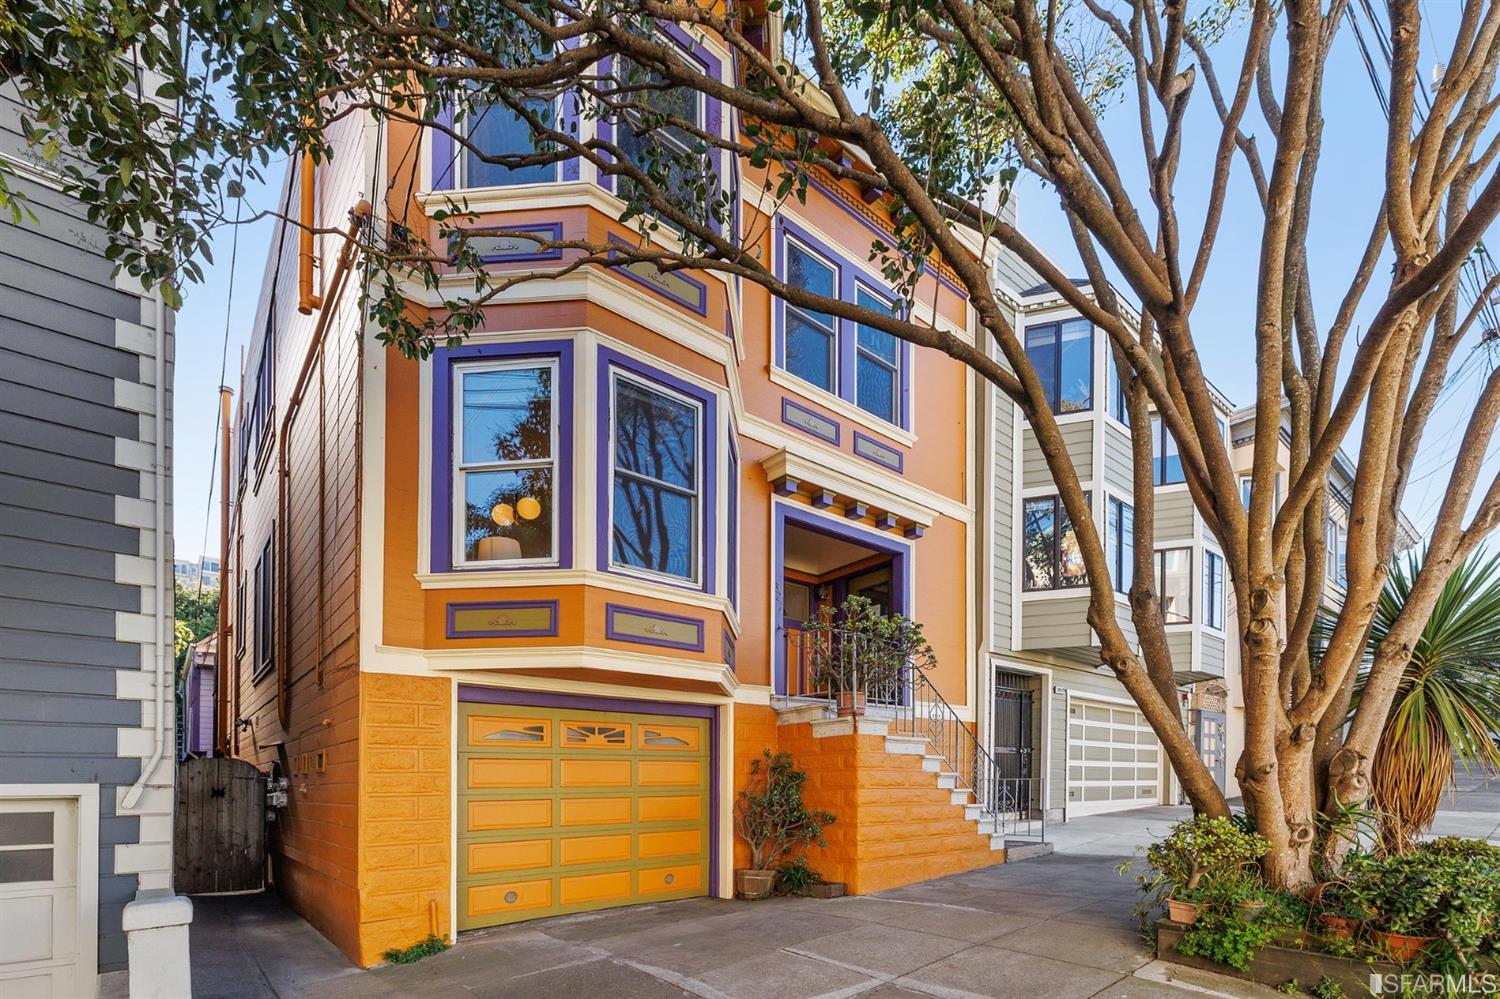 Serious Question: Should You Paint Your House Bright Orange?